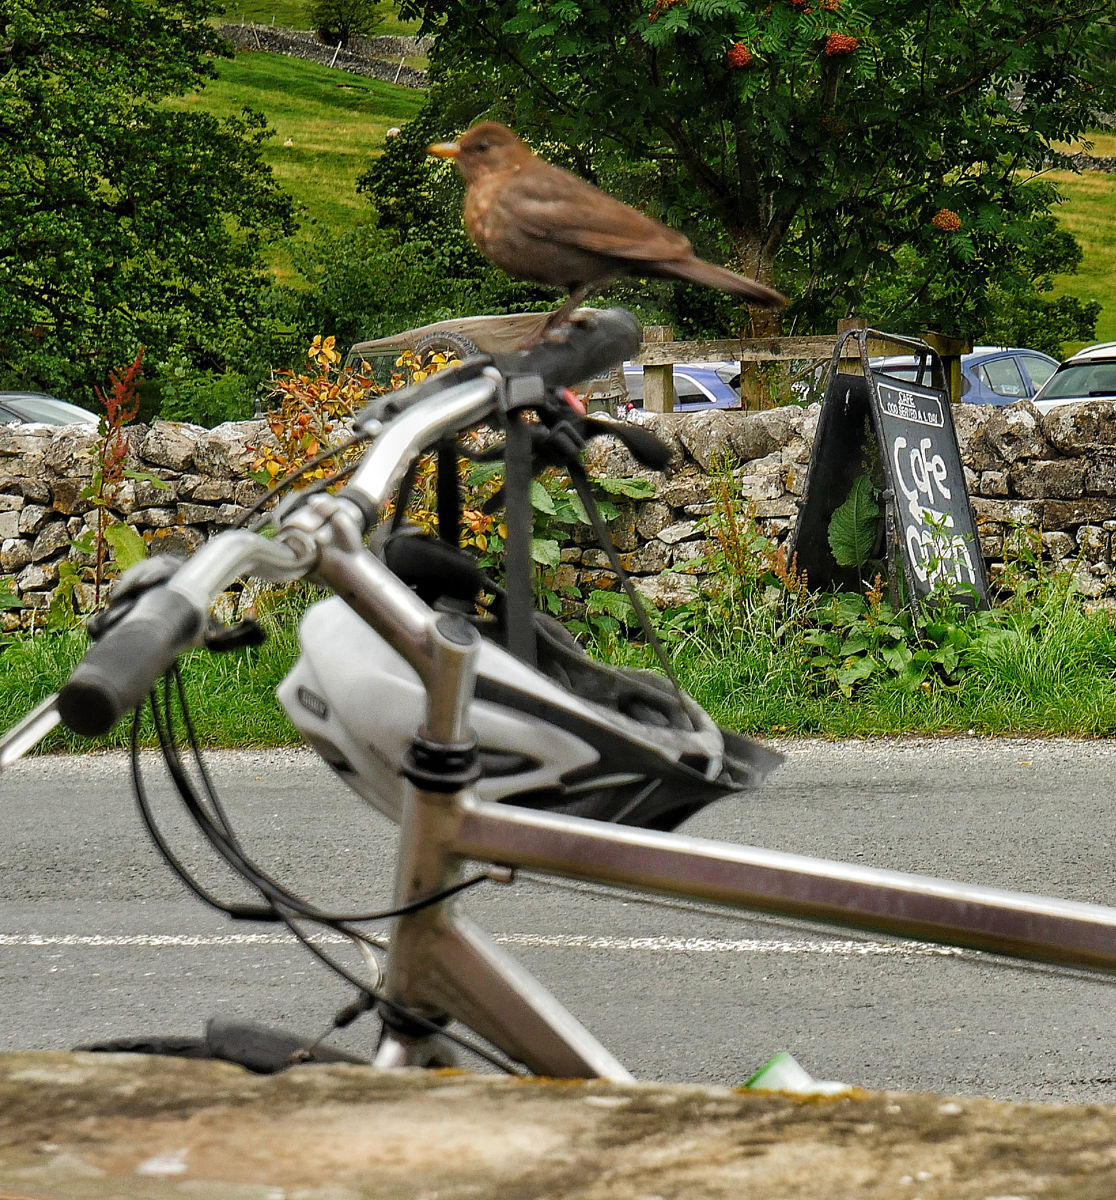 Bird on a bike, Phil Neath